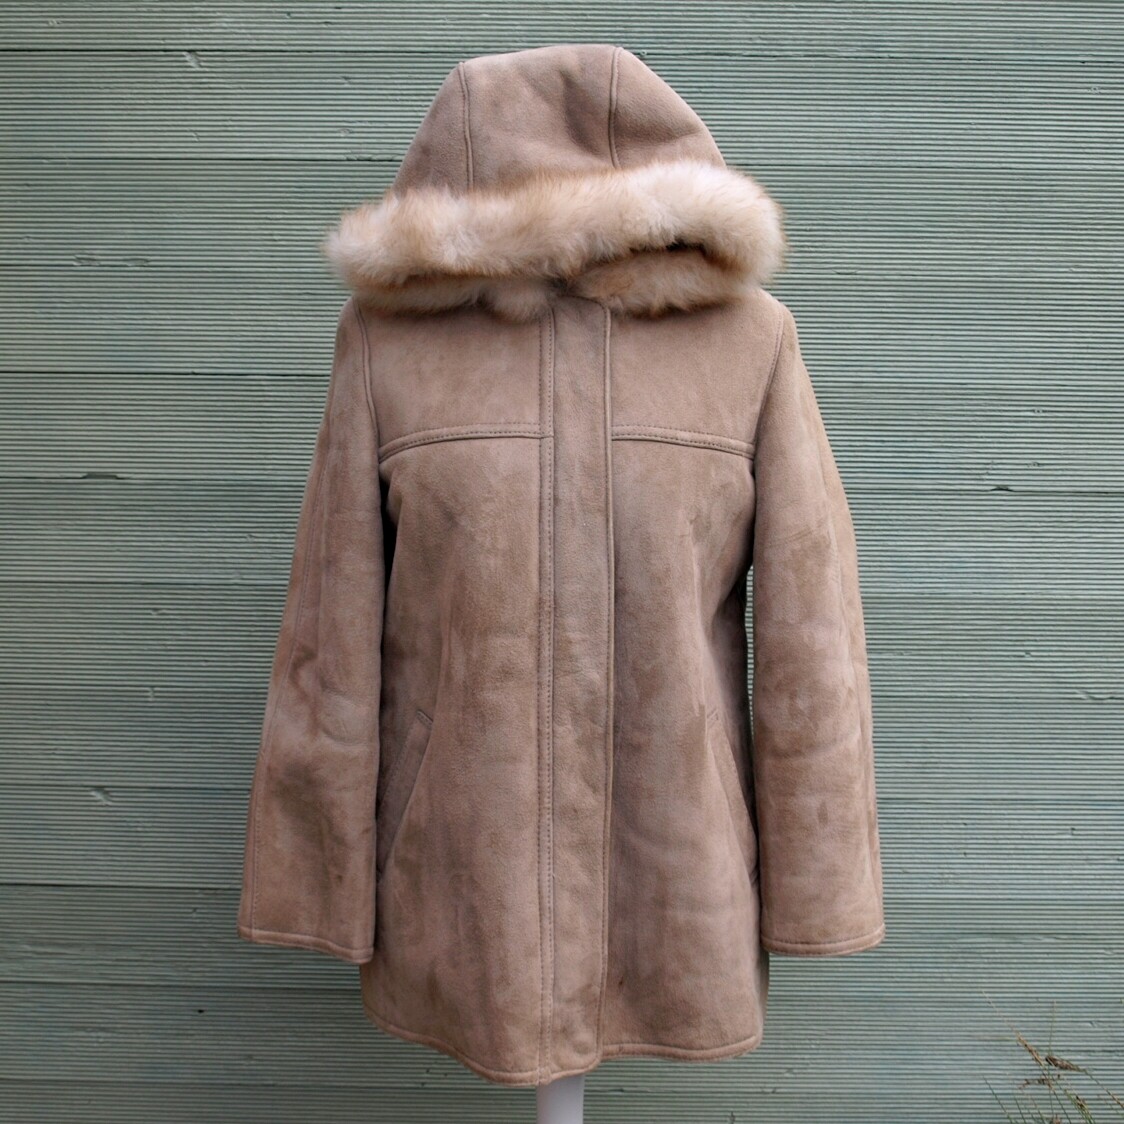 Gorgeous Ladies Warm Beige Sheepskin Hooded Morlands Coat 14